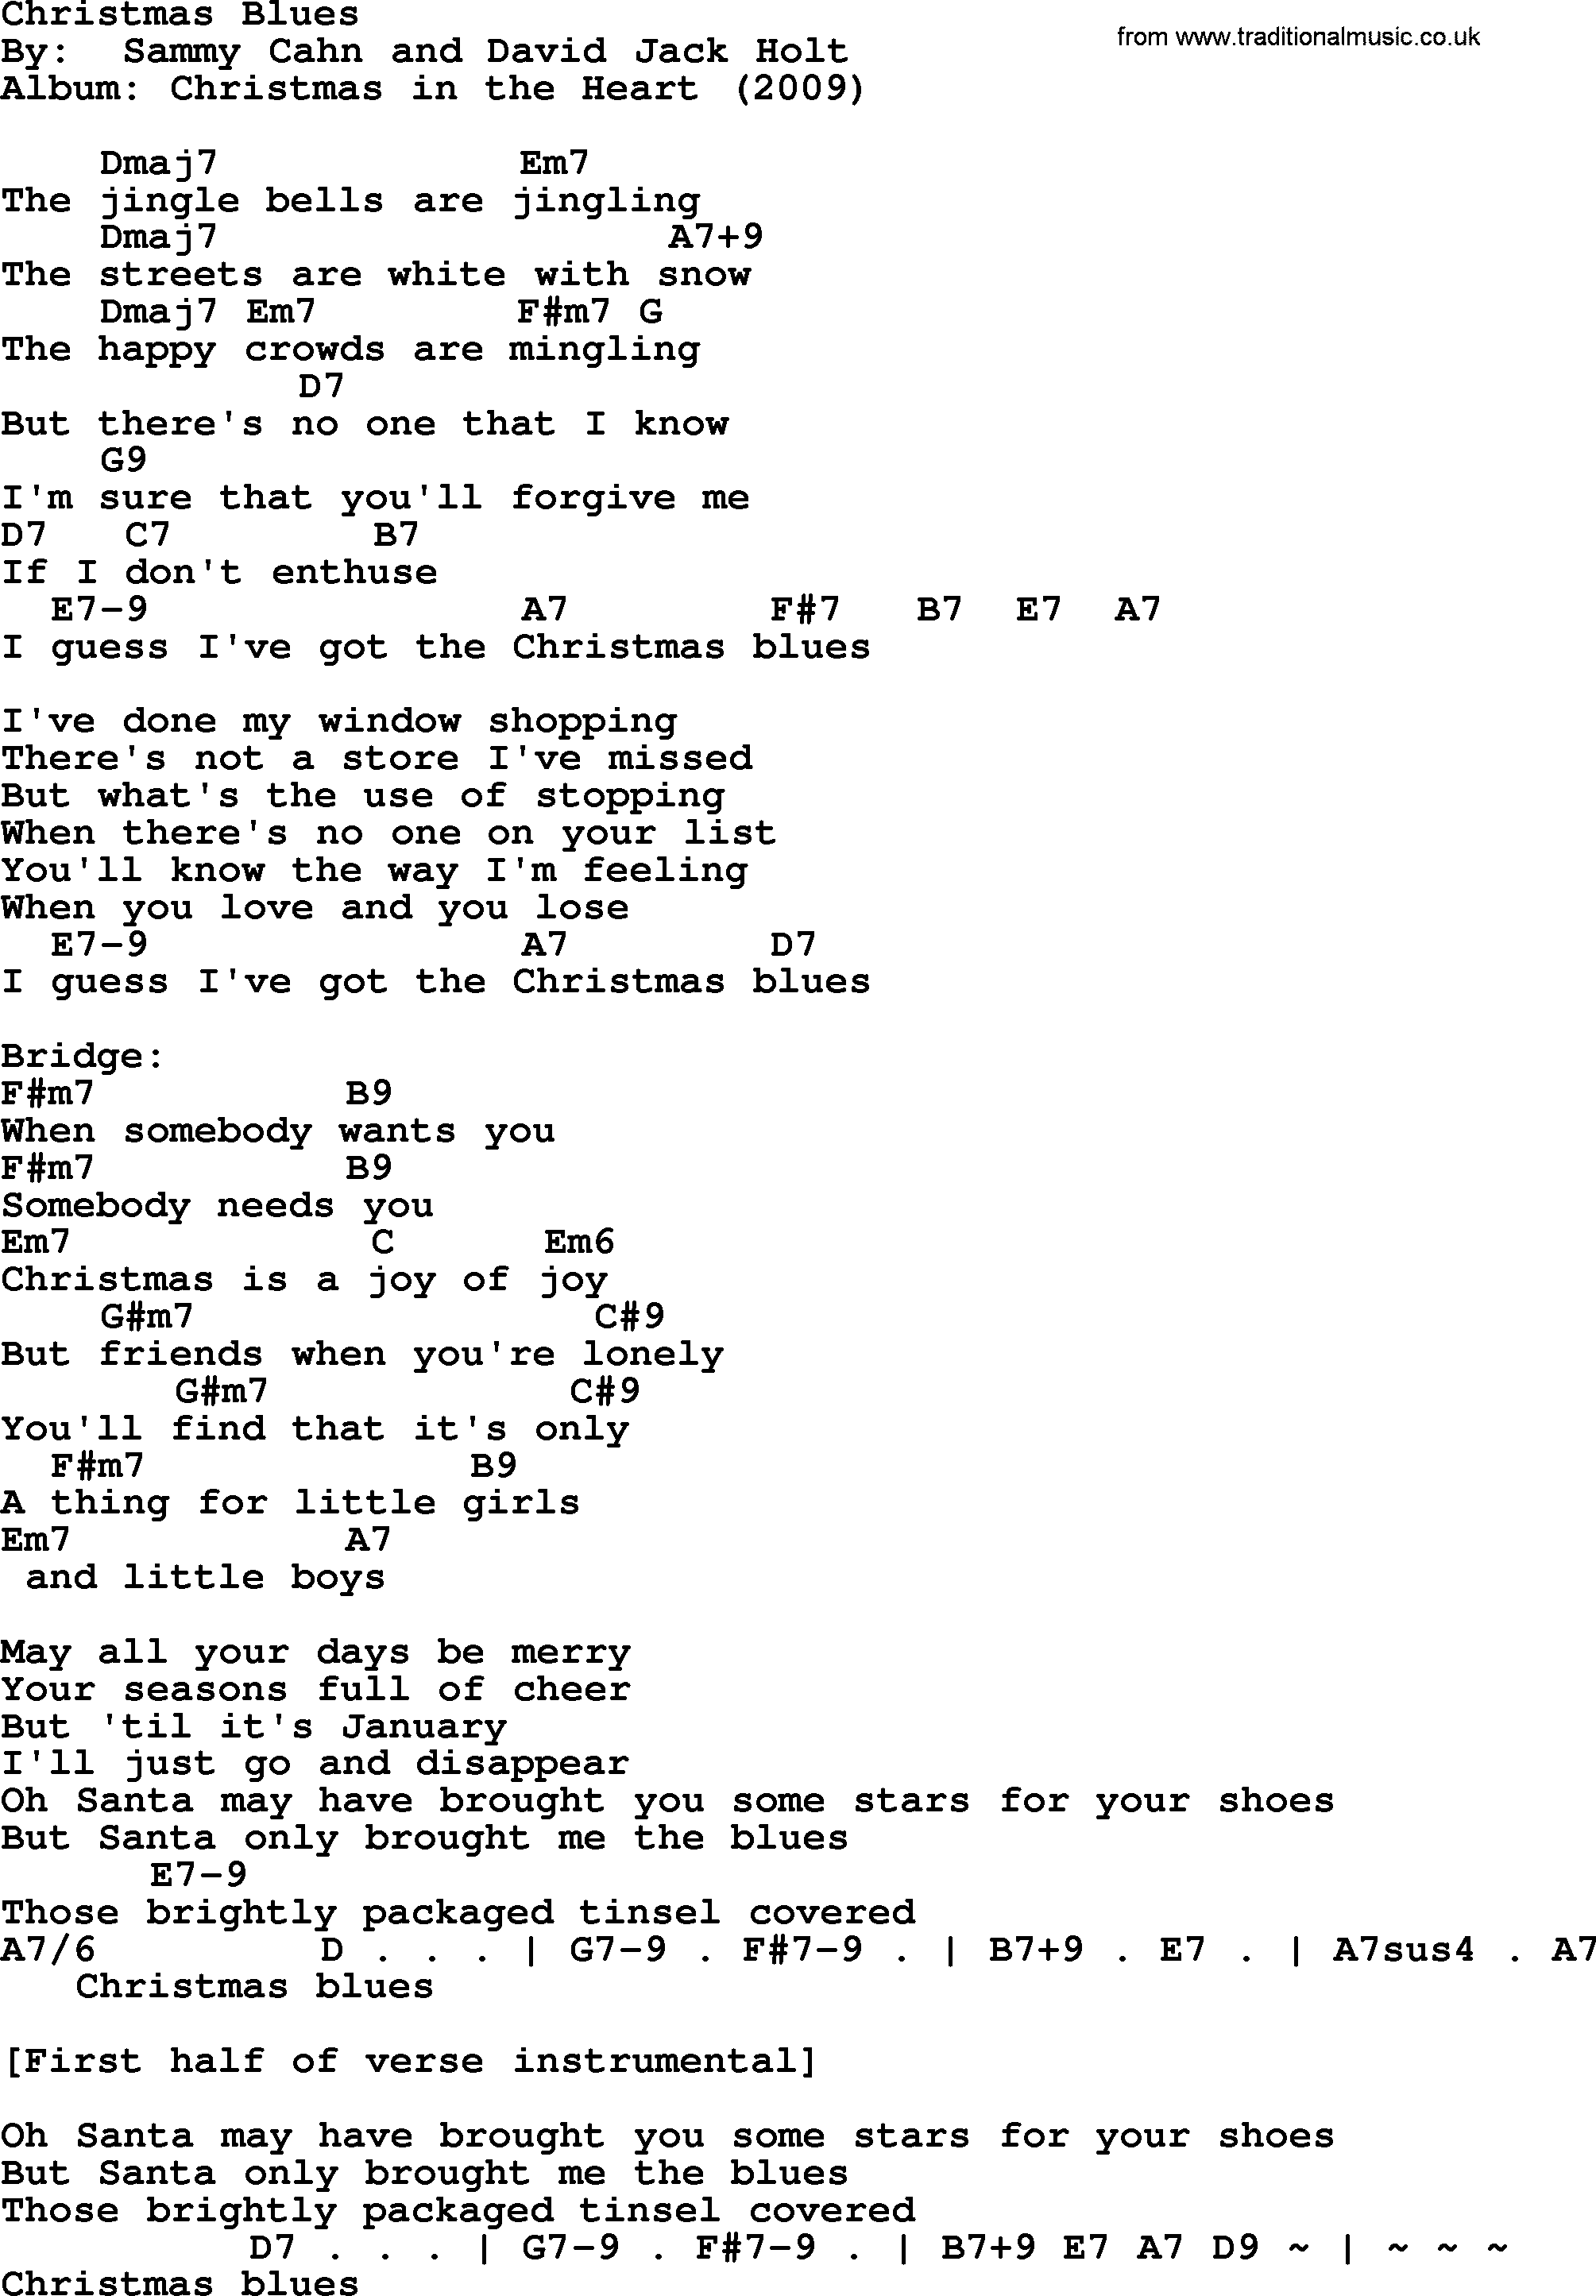 Bob Dylan song, lyrics with chords - Christmas Blues